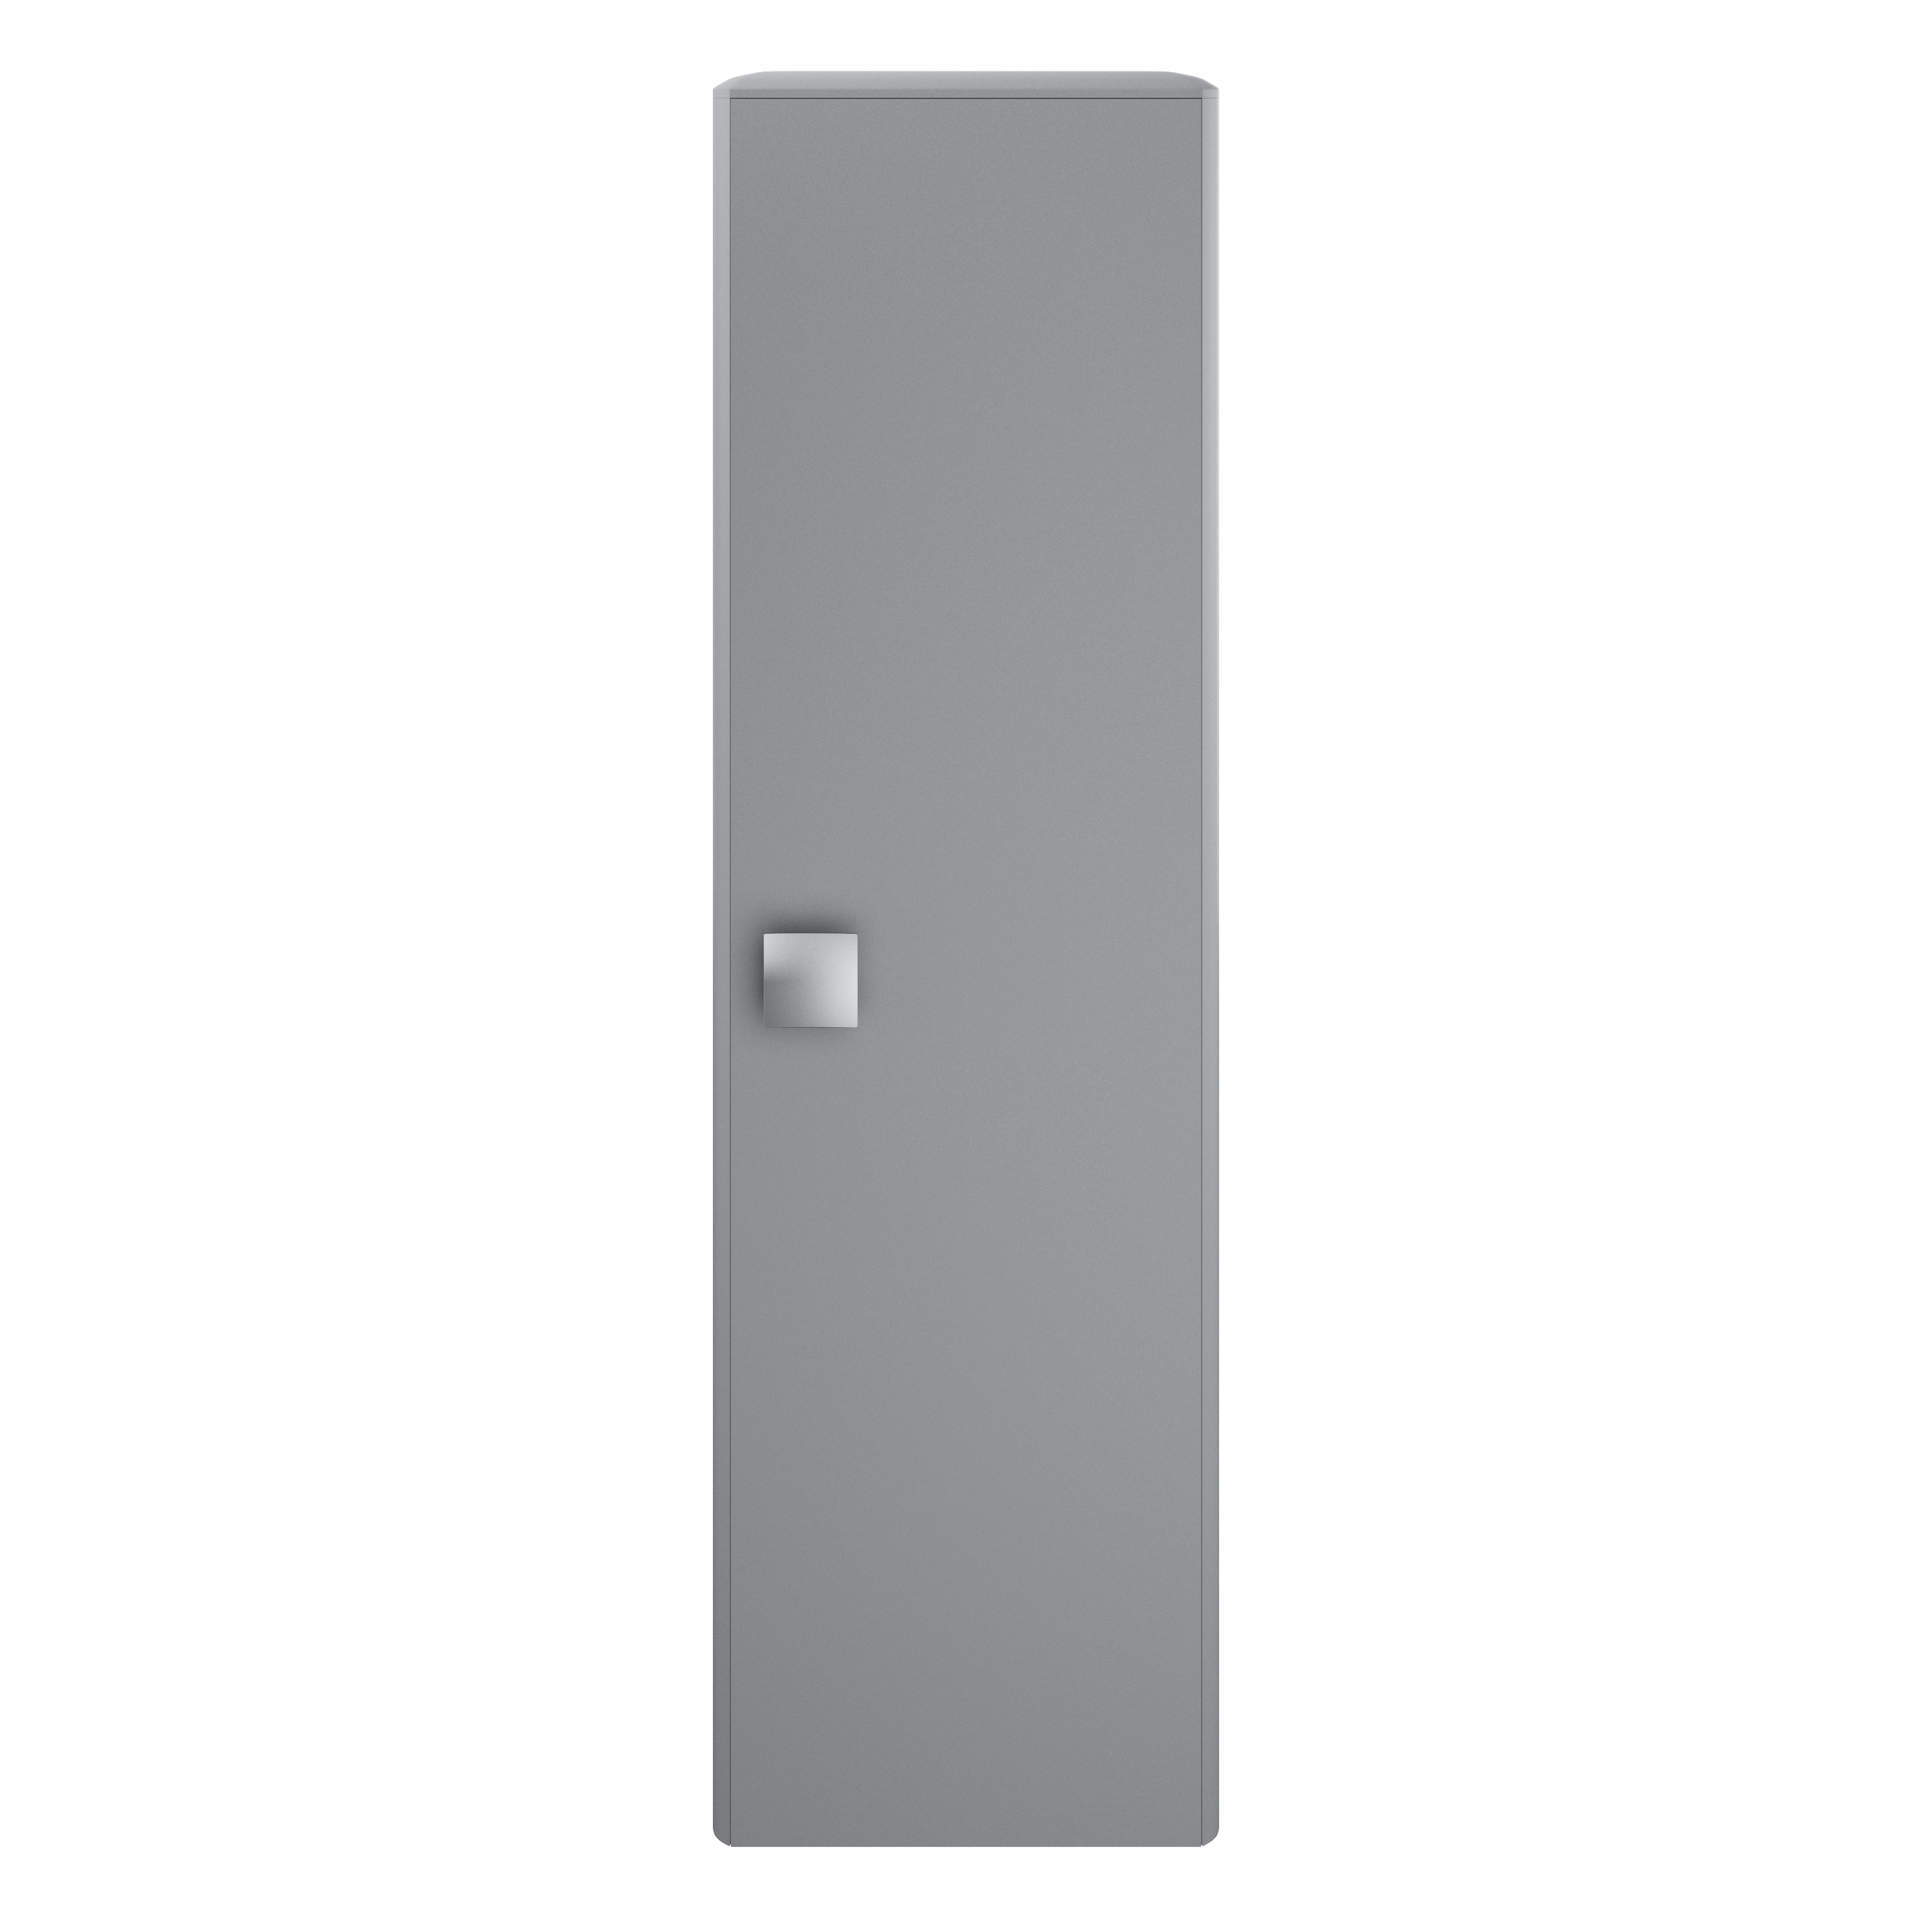 1 Soft Close Door and 2 Shelves Hudson Reed SAR262 Sarenna ǀ Modern Bathroom Wall Hung Tall Unit Dove Grey 1200mm x 350mm x 250mm 350mm 